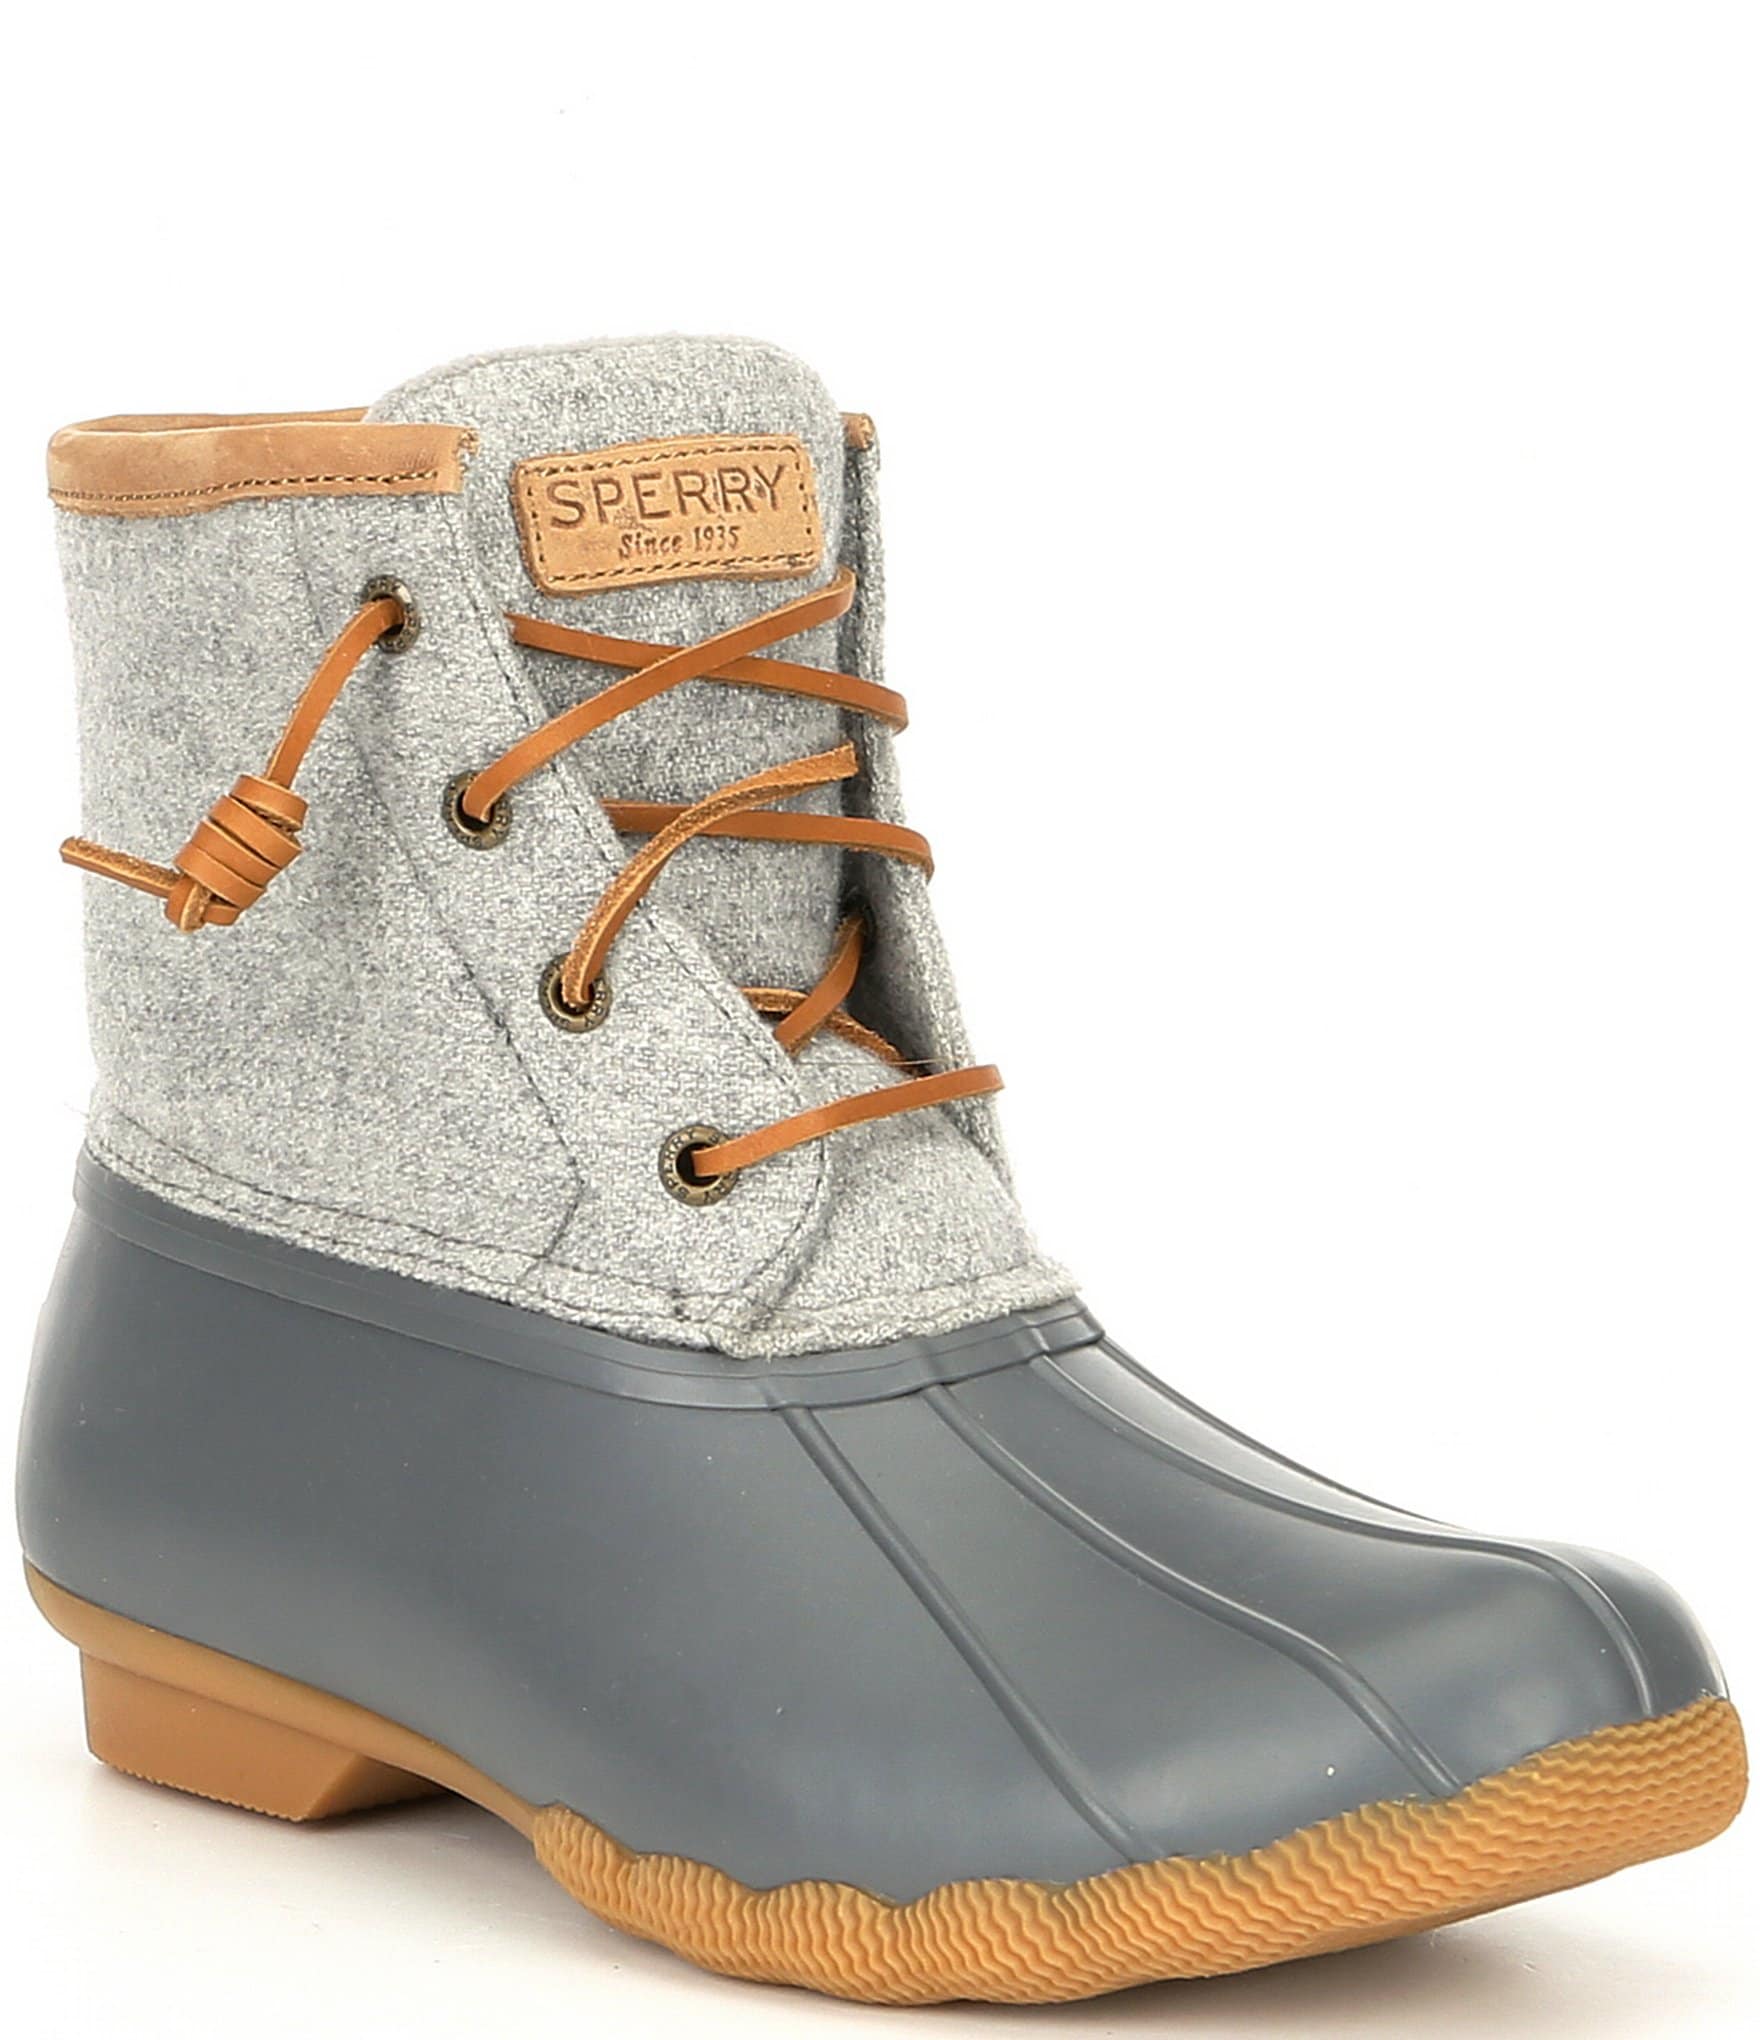 sperry duck: Women's Shoes | Dillard's